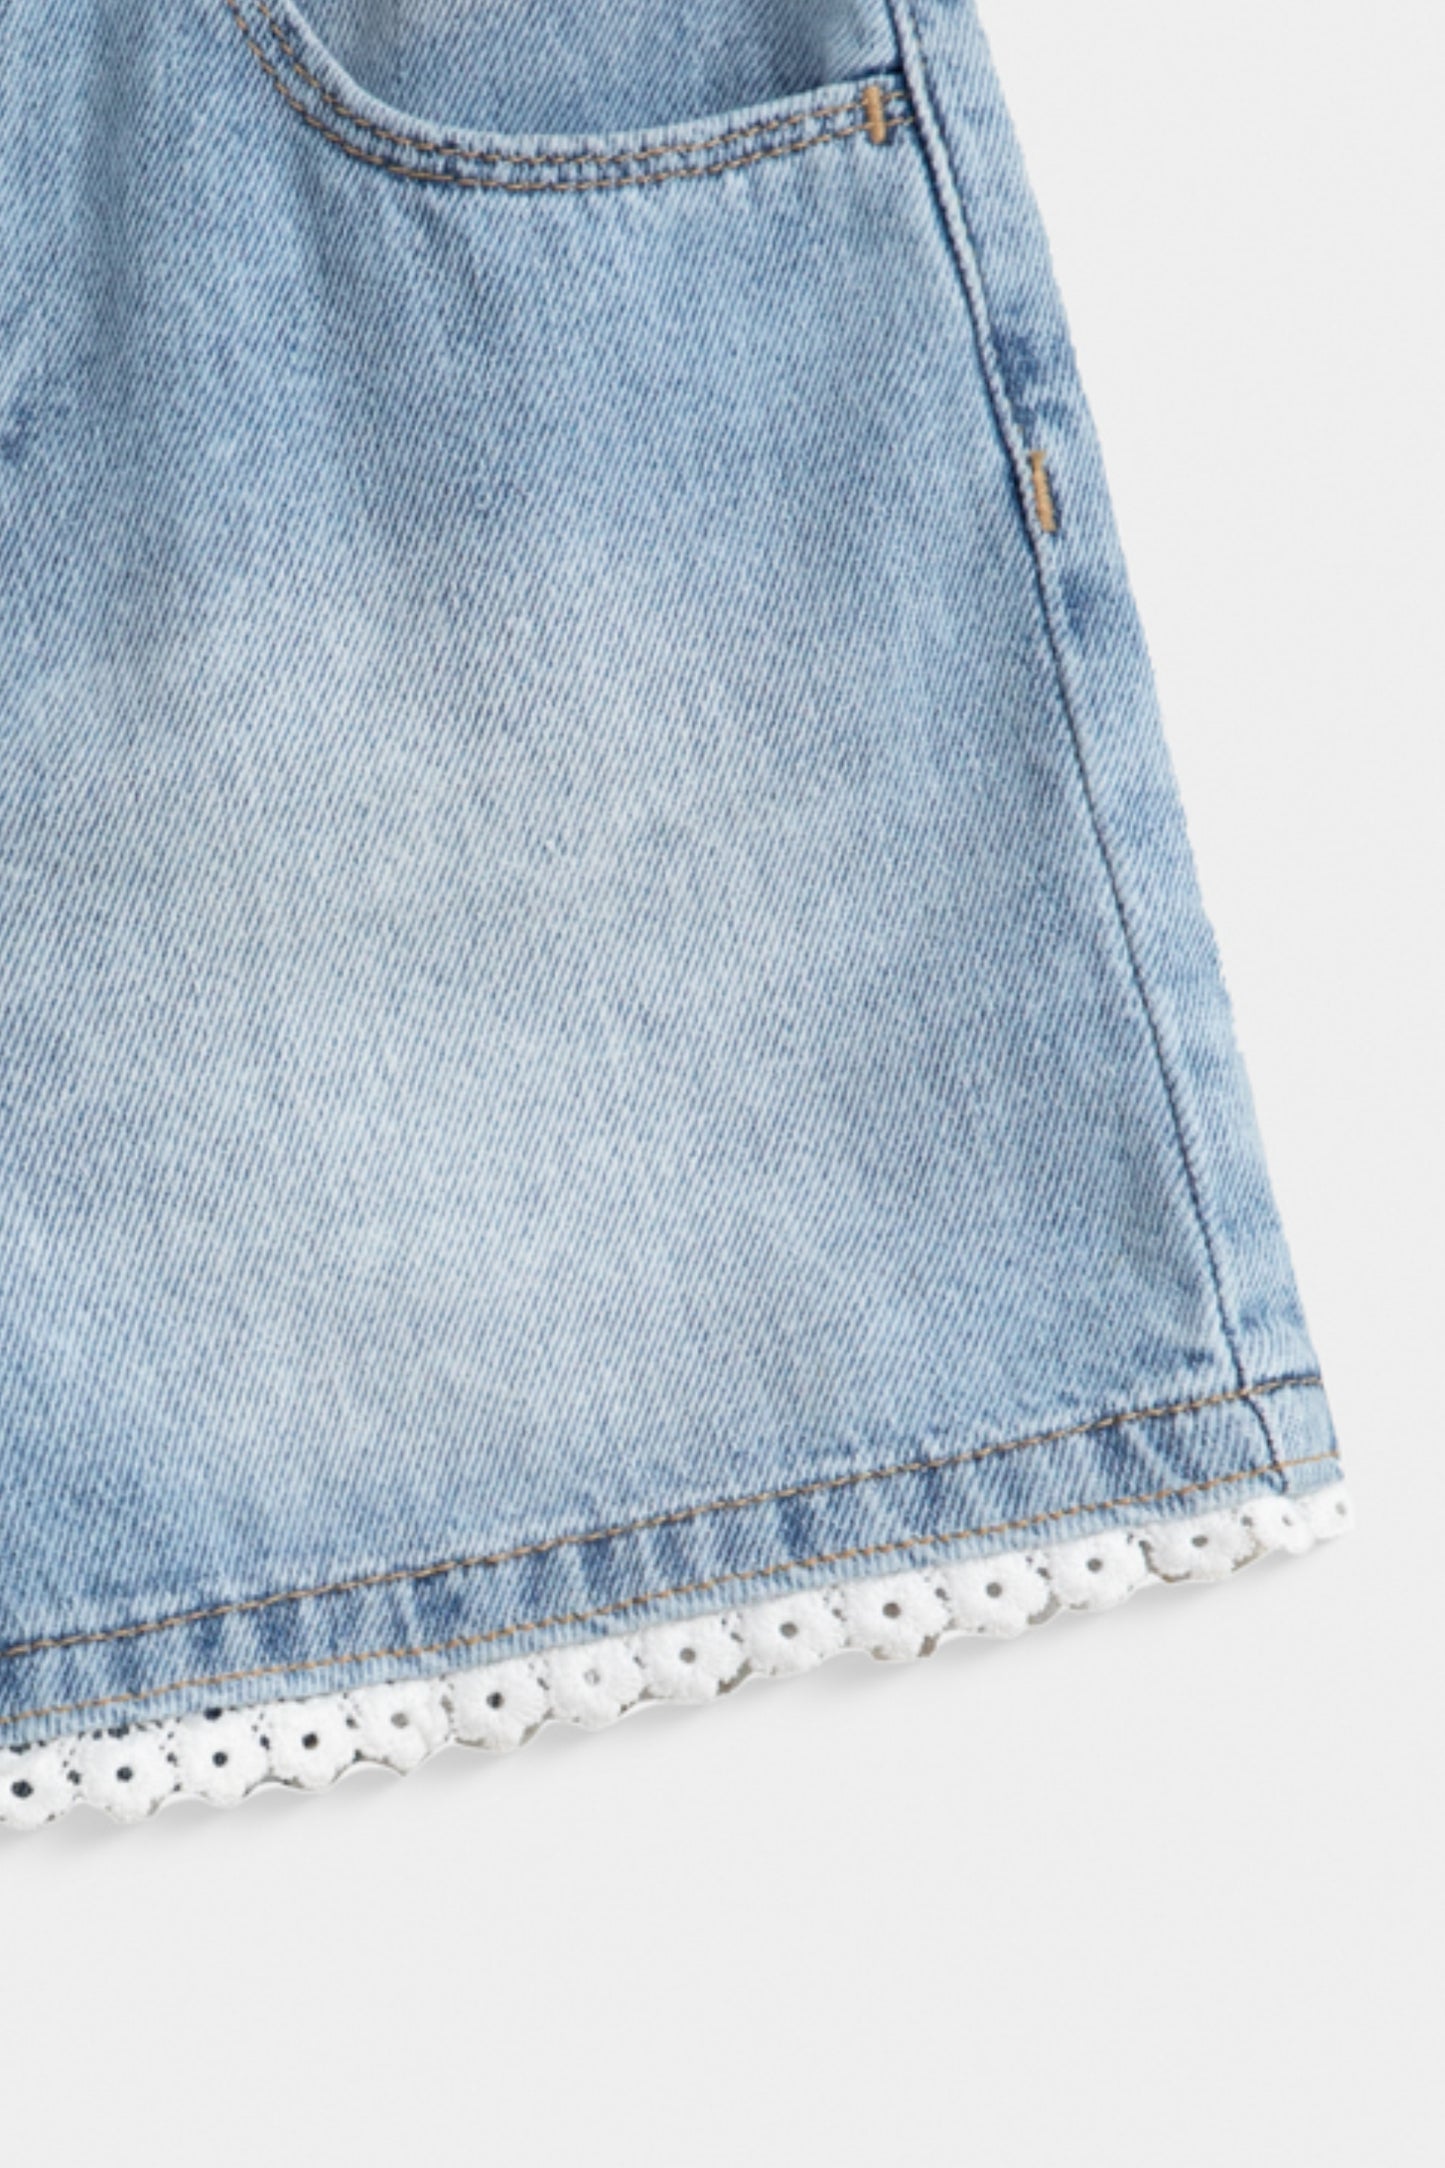 Denim Shorts With Lace Detail On Hem.